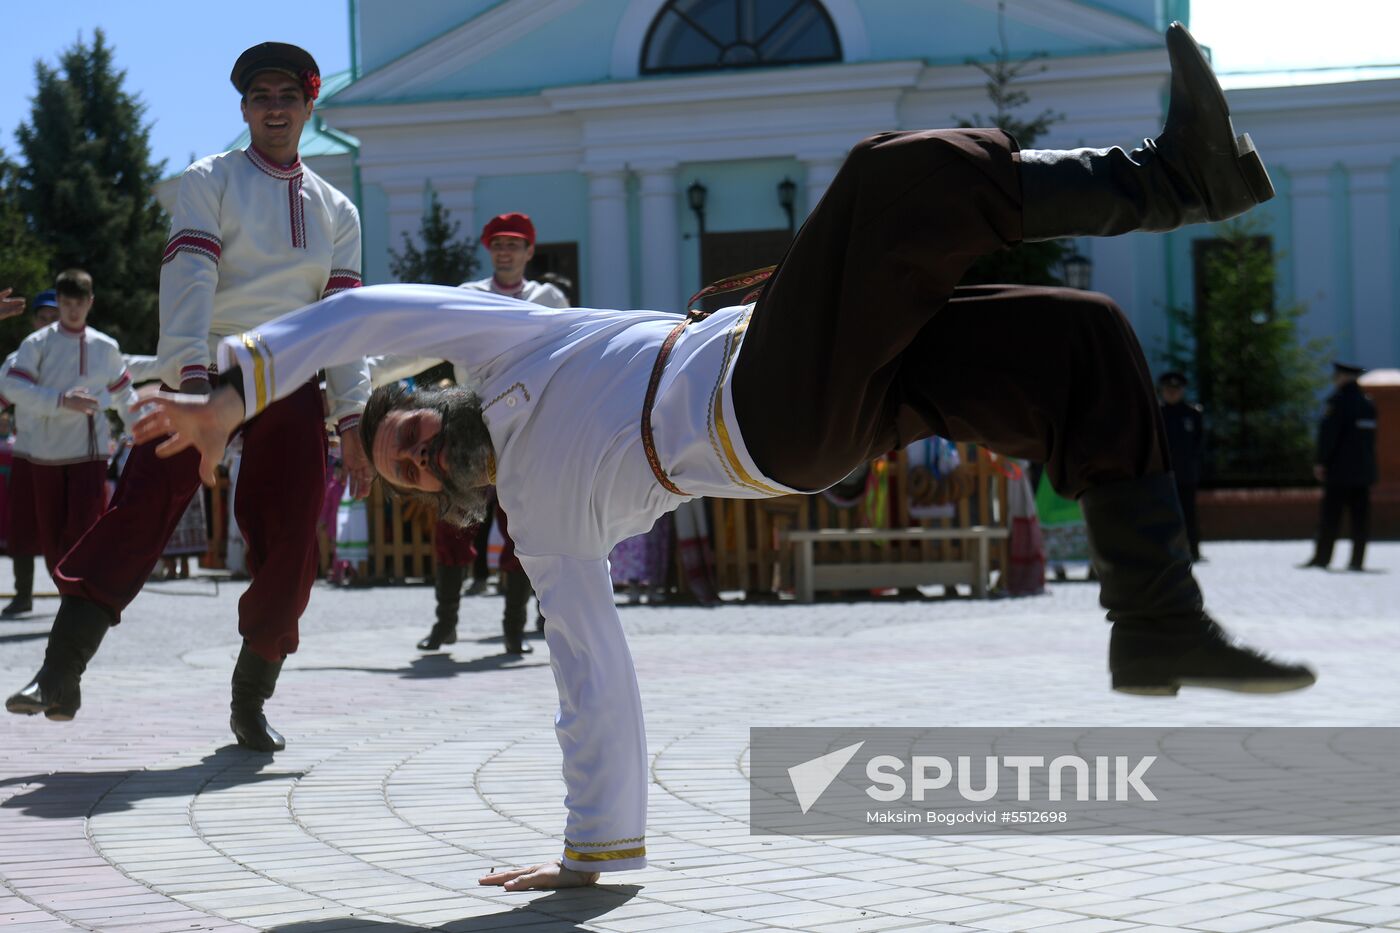 Russian folk festival Karavon in Kazan